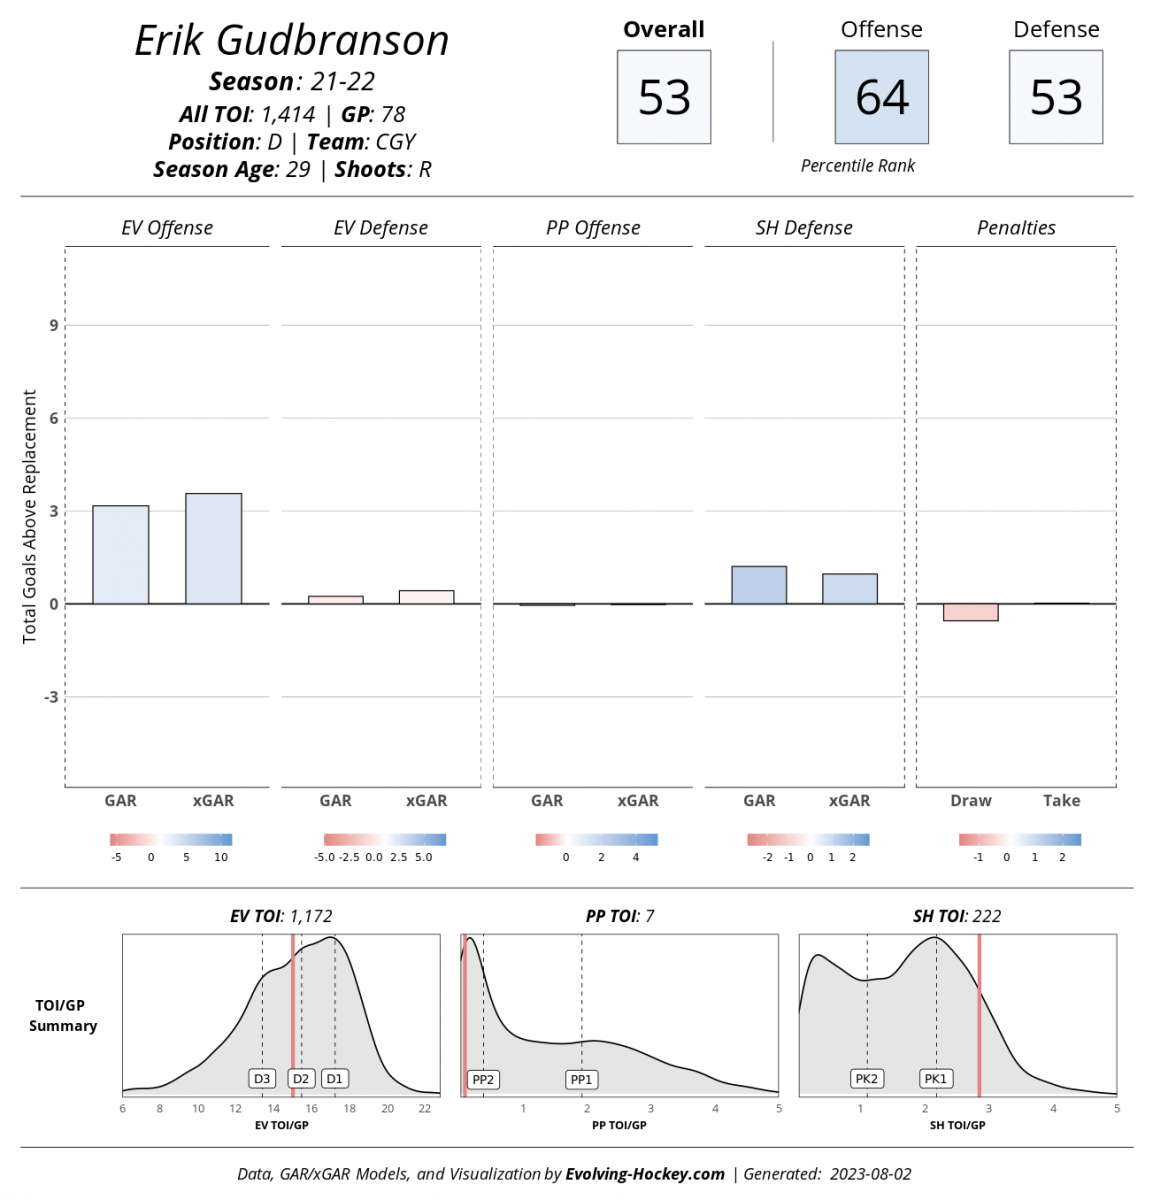 Erik Gudbranson, Evolving-Hockey.com